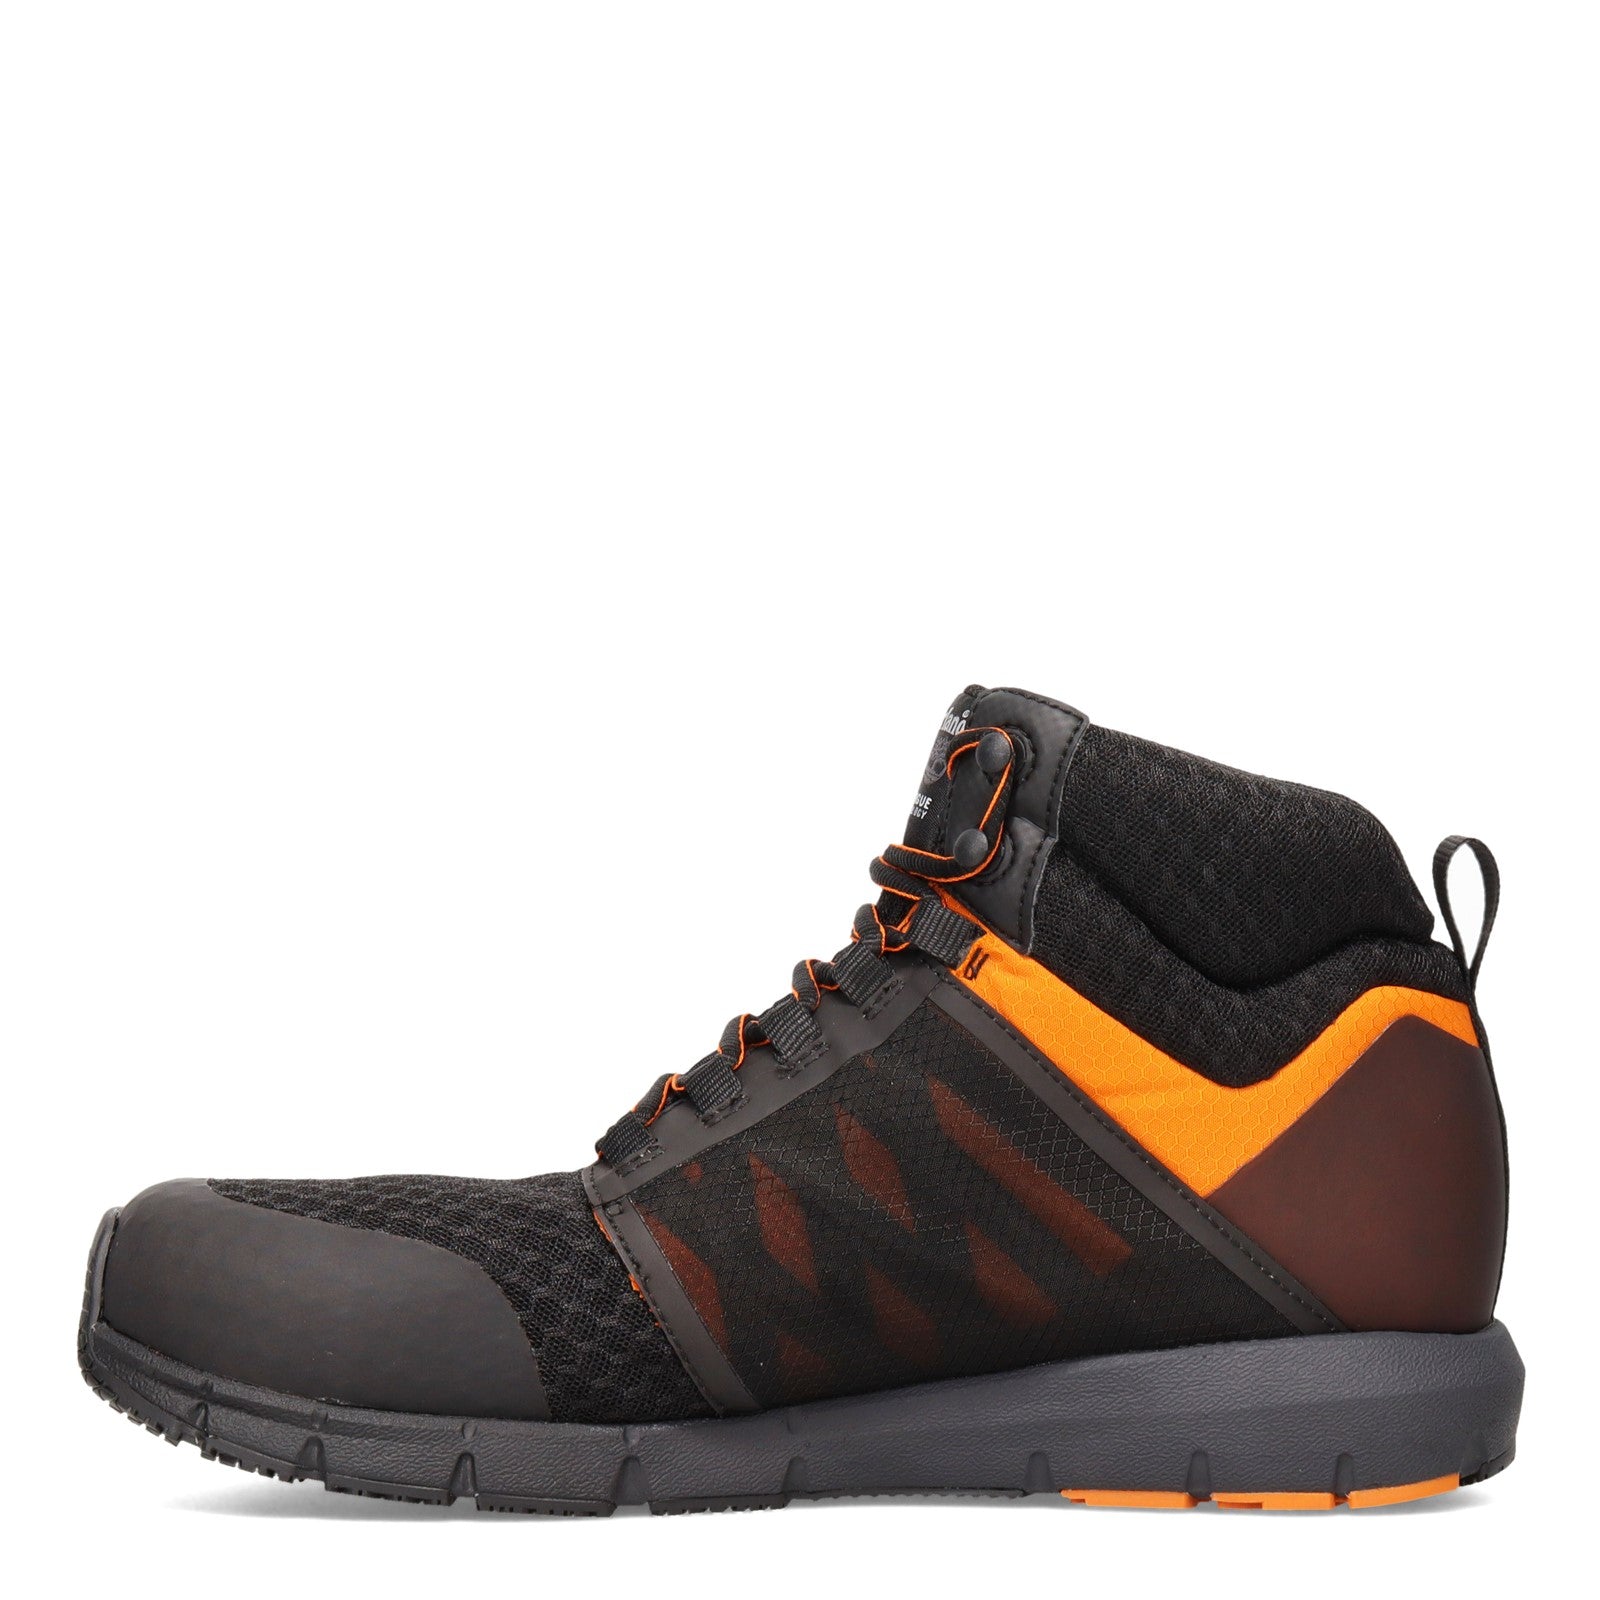 TB0A29QB001 - Timberland Pro Men's Radius Composite Toe Work Sneaker